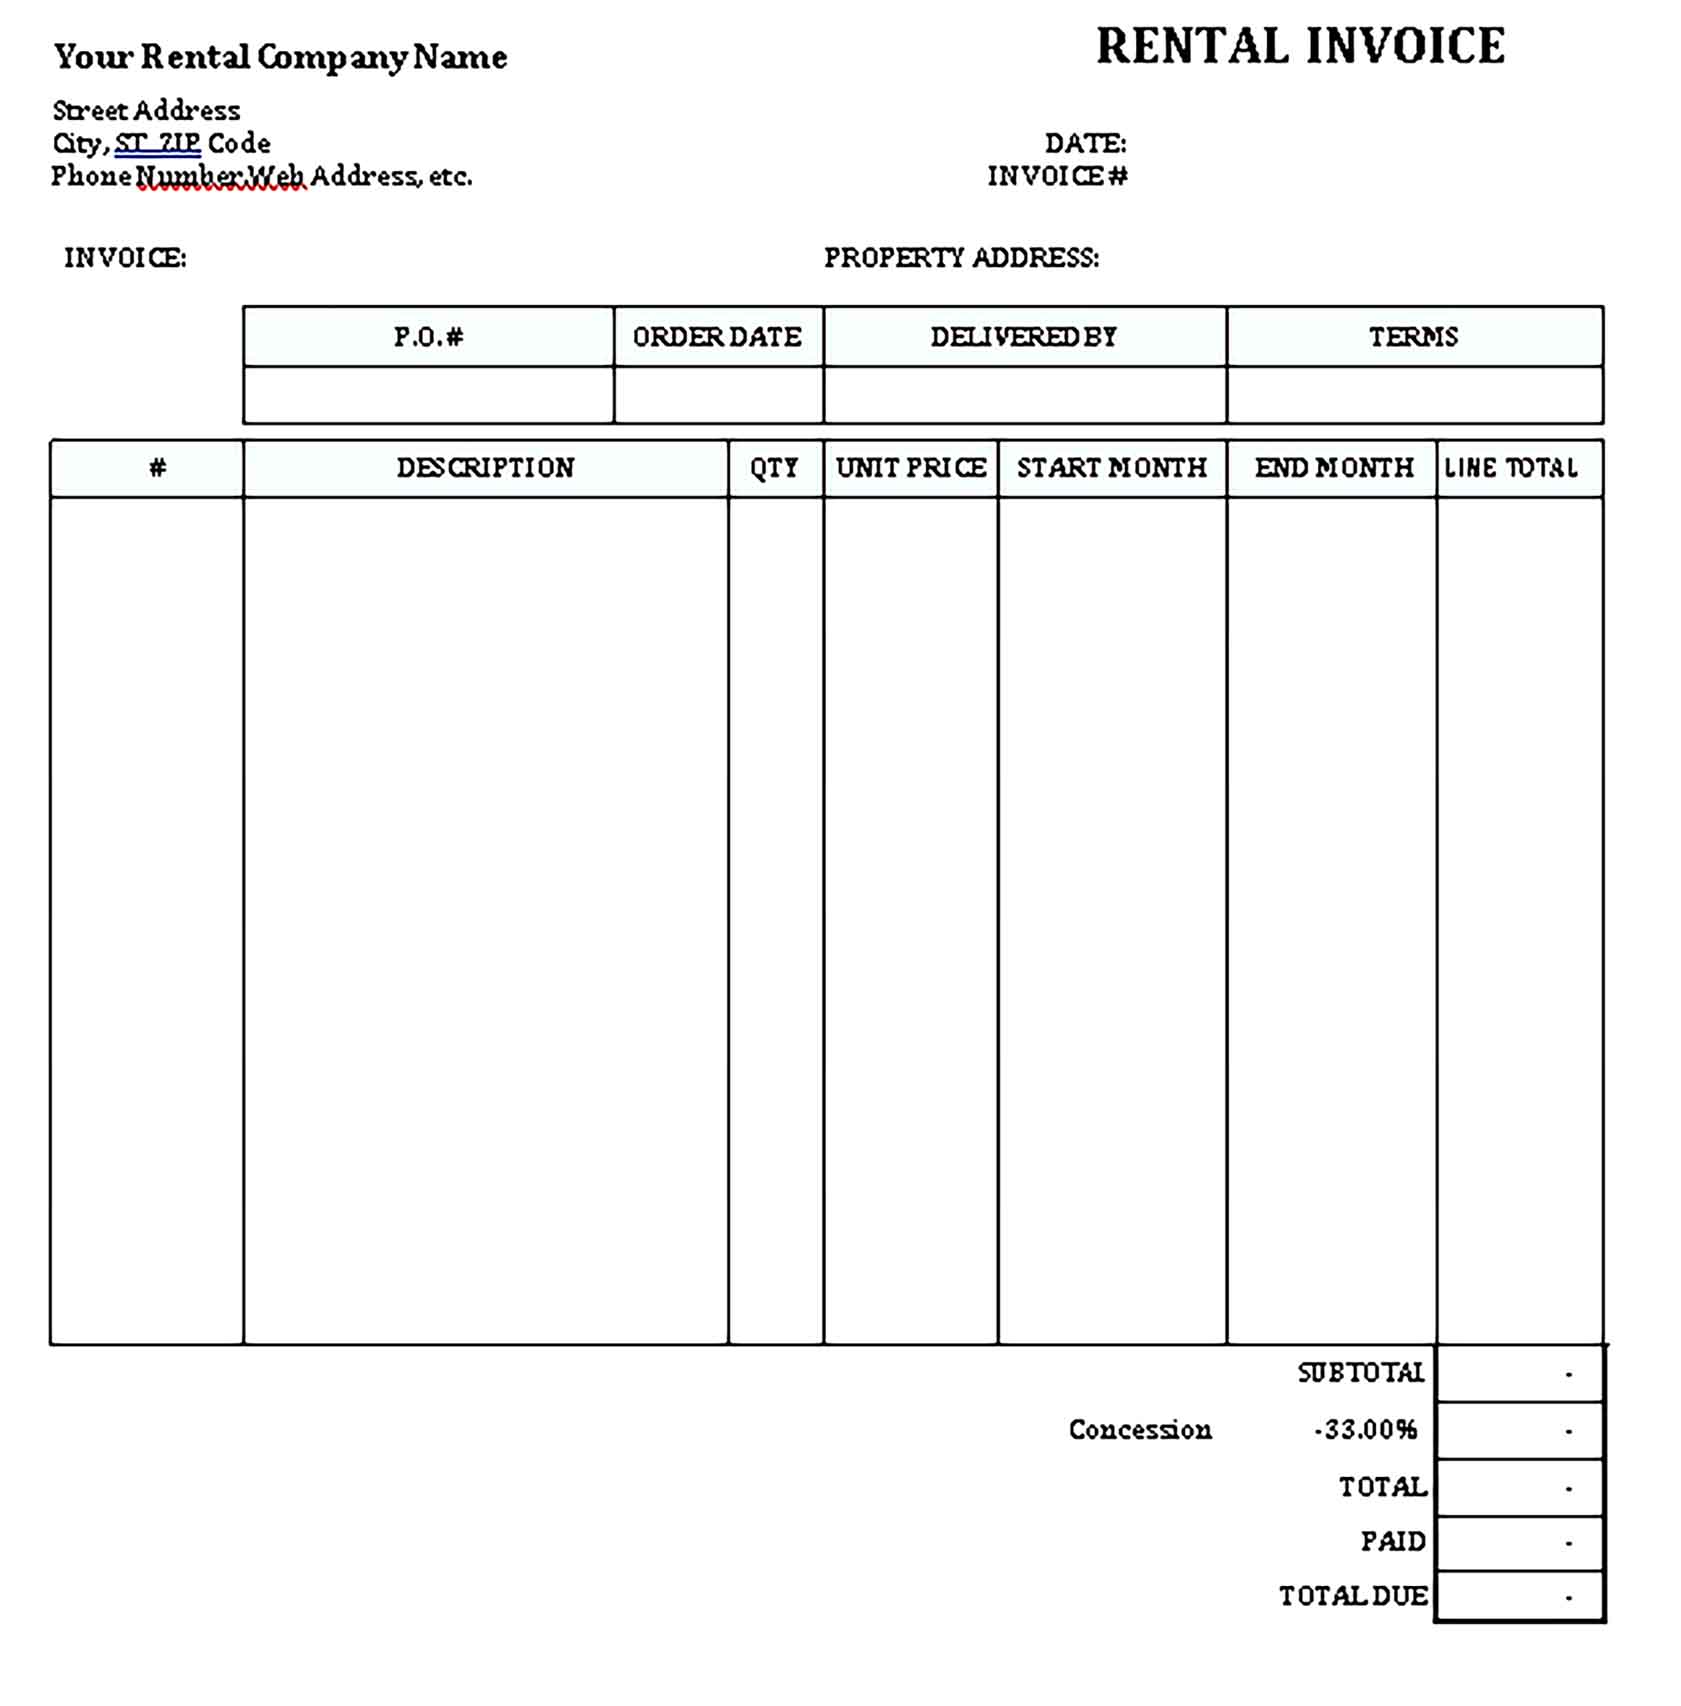 Sample Templates Company Rental Invoice